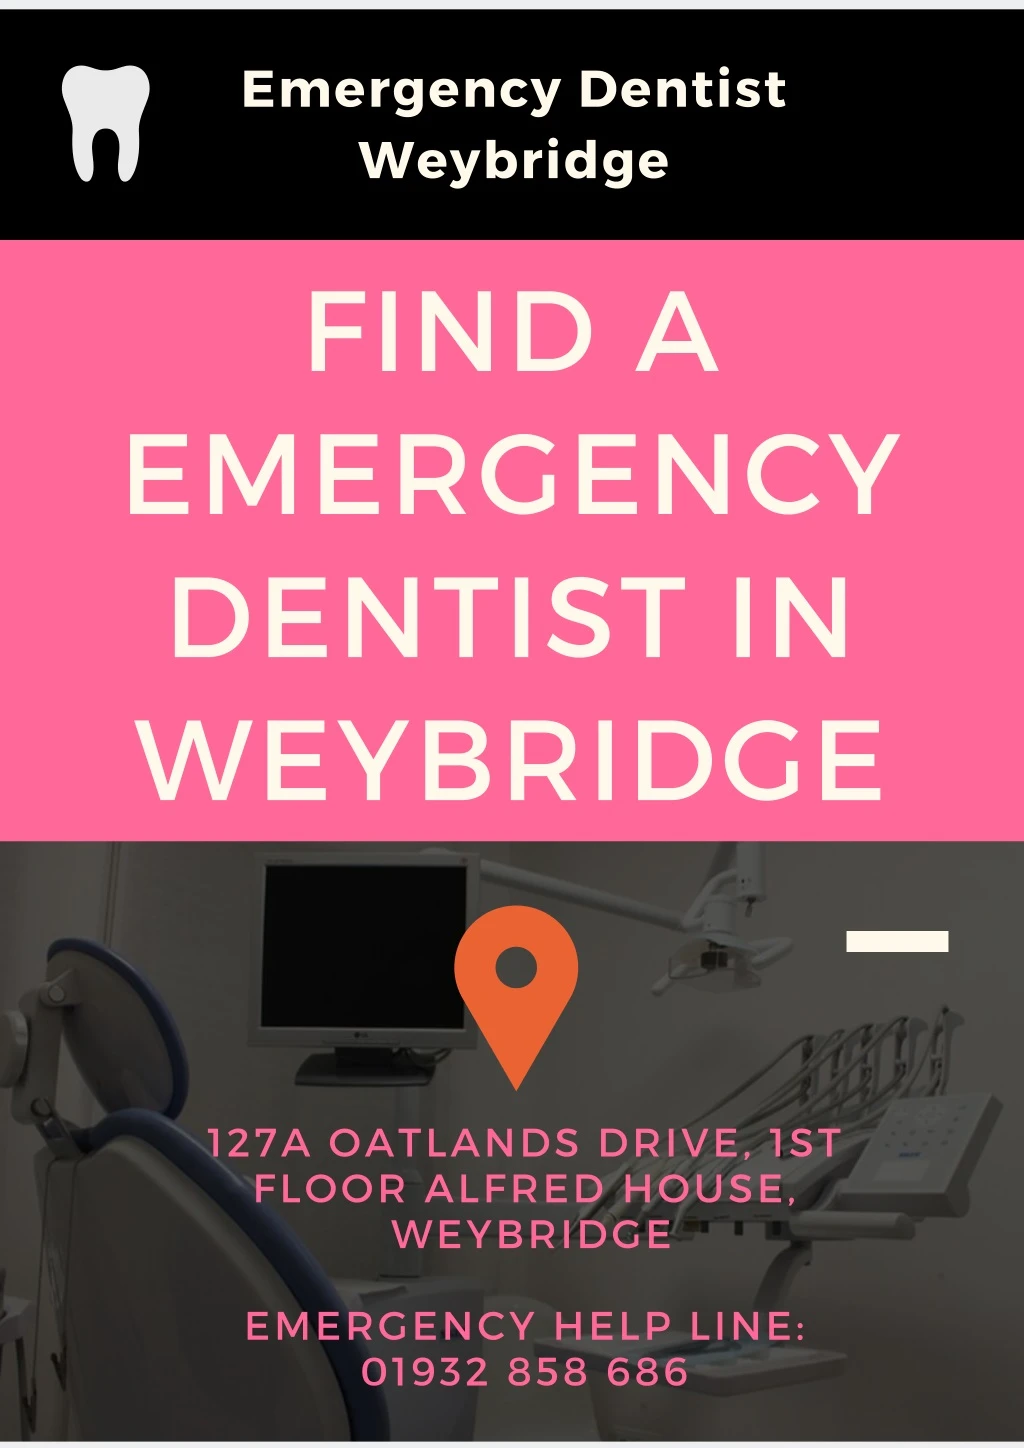 emergency dentist weybridge